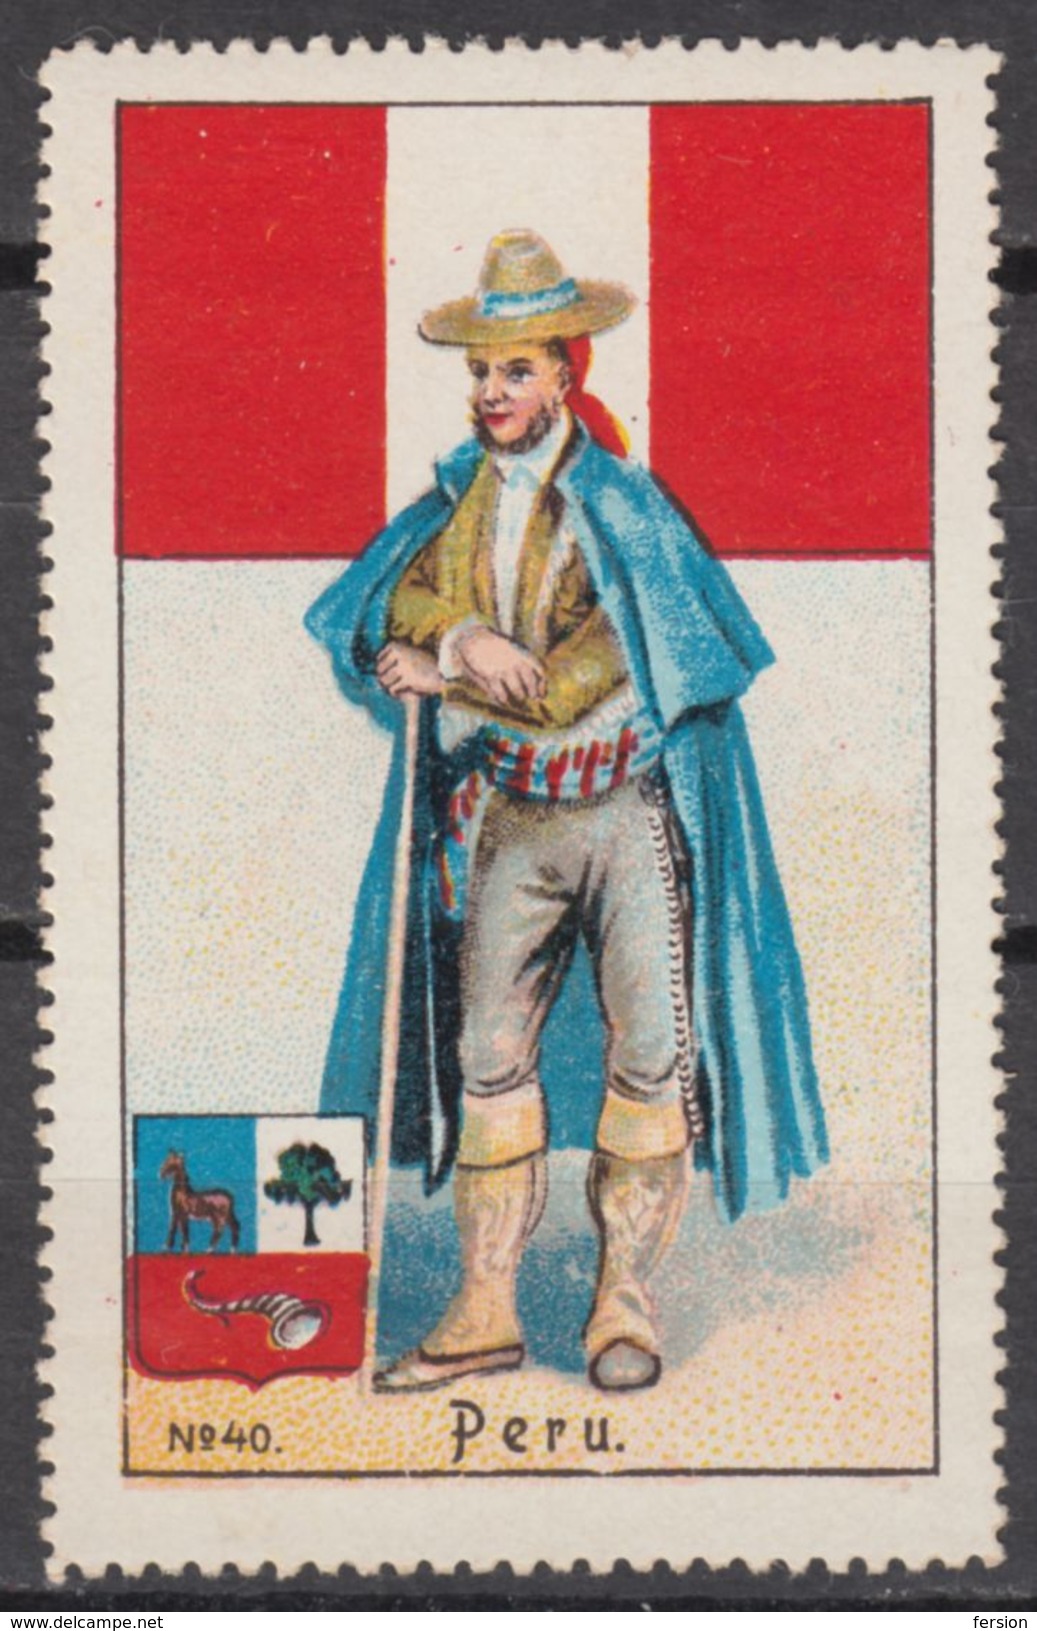 PERU National Costume  / Folk Art / Flag / Coat Of Arms - Cinderella / Label / Vignette - MH - Perù